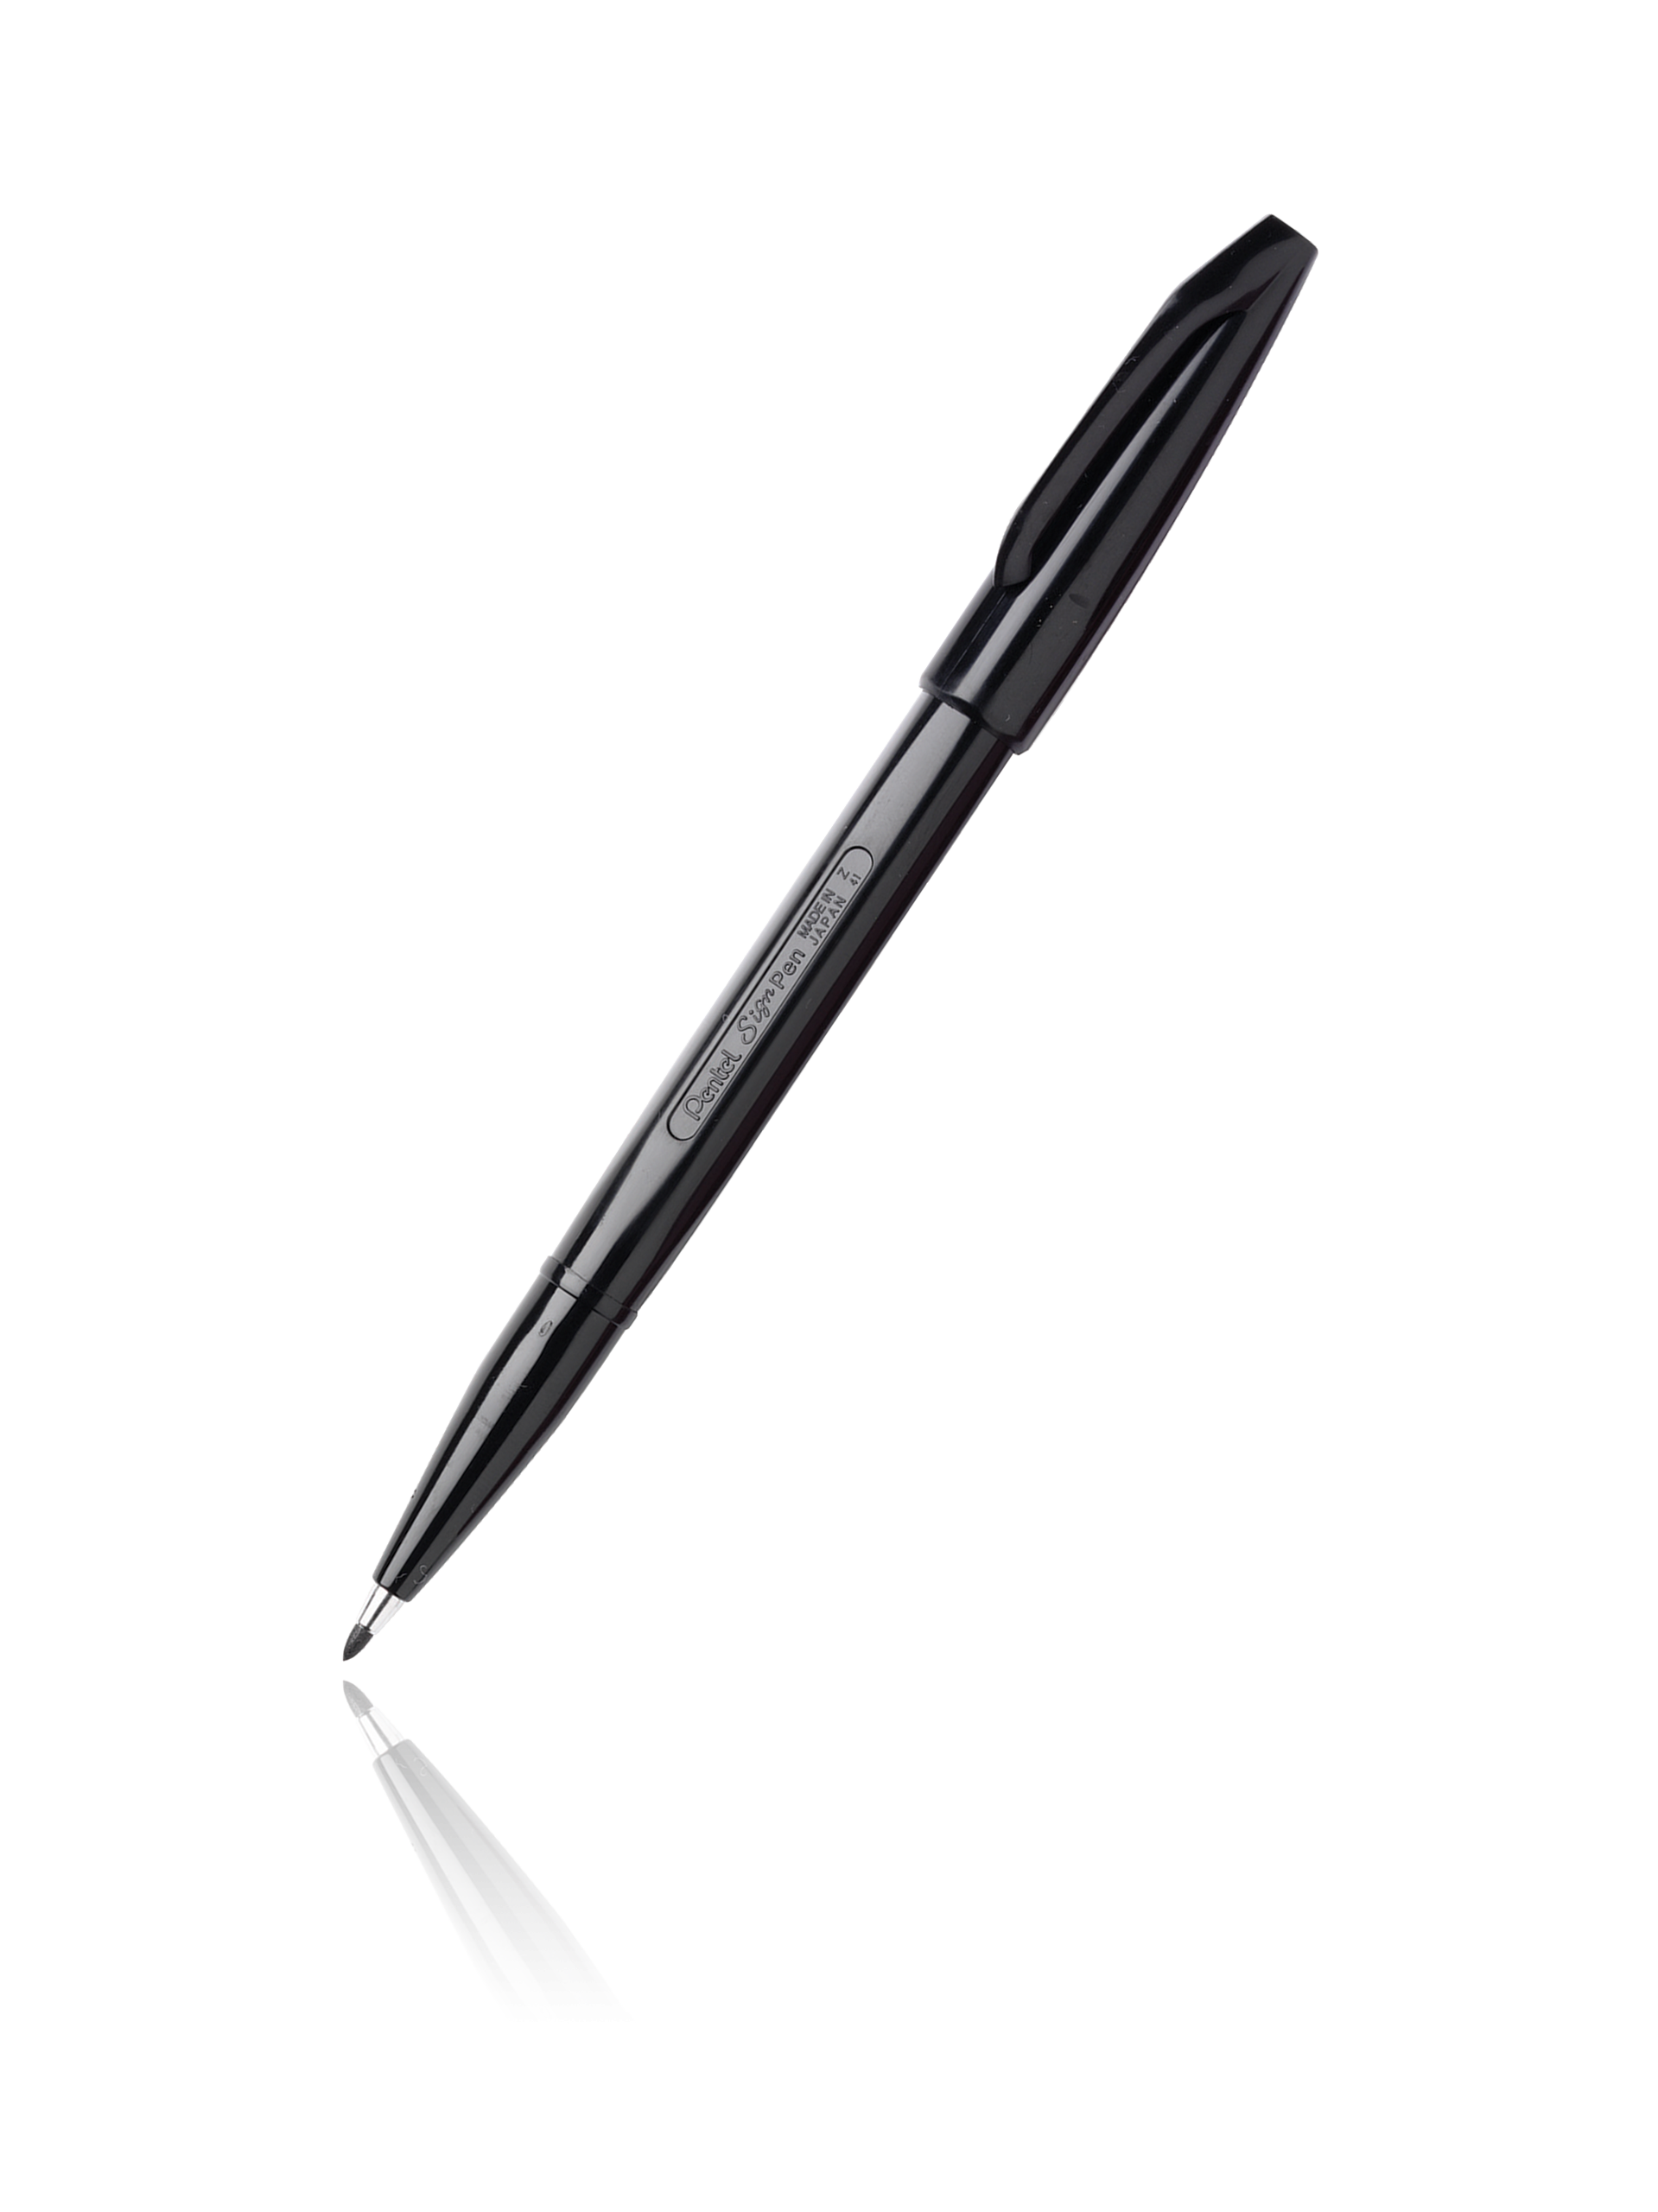 Pentel Sign Pen - the original fiber tipped pen - Pentel